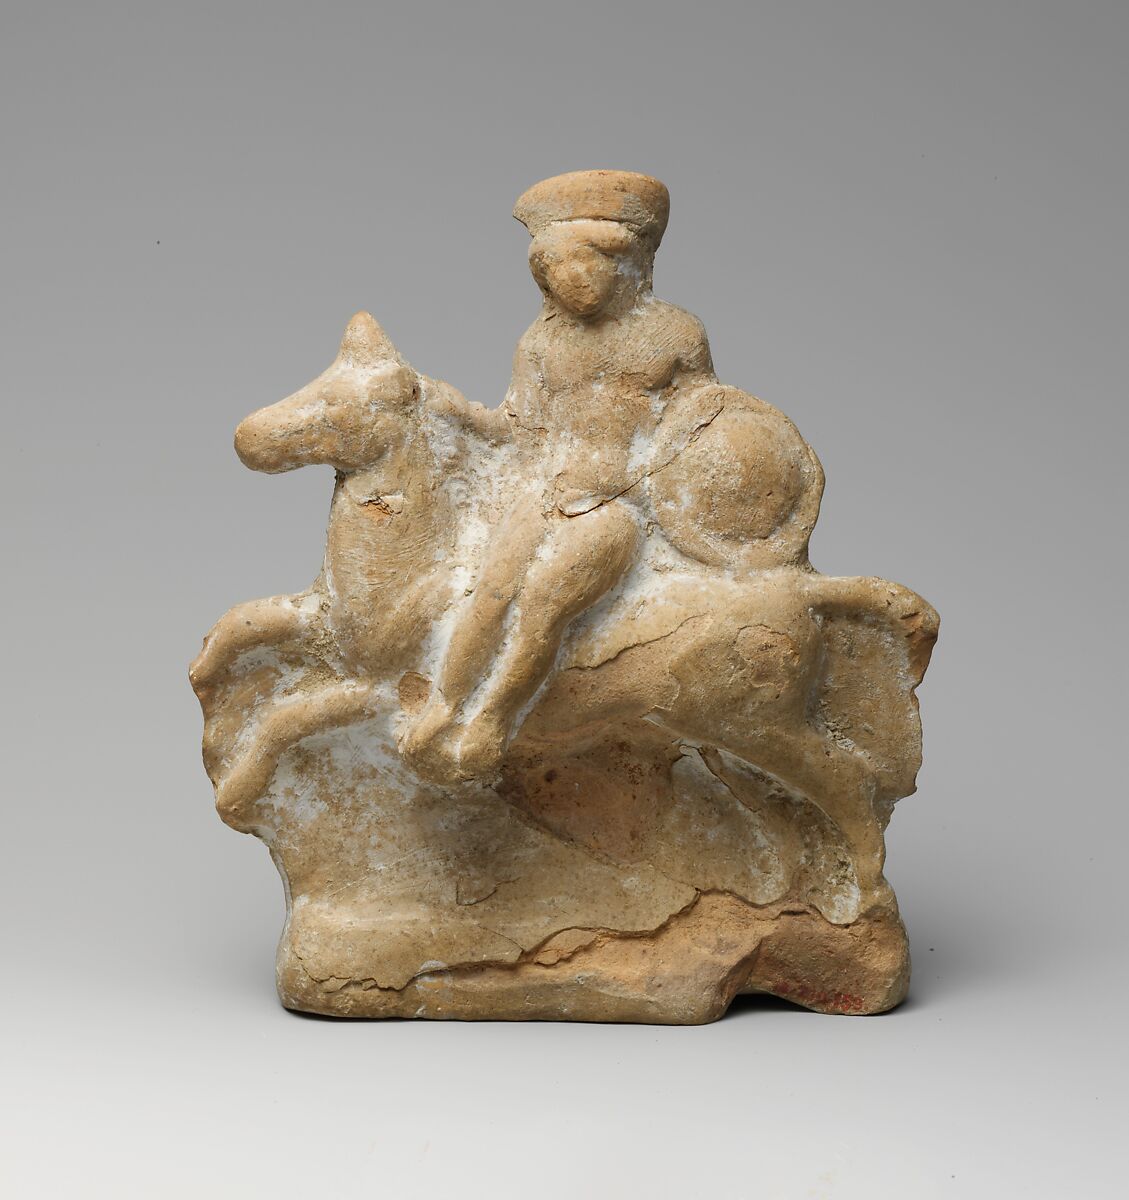 Terracotta statuette of a man seated on a horse, Terracotta, Greek 